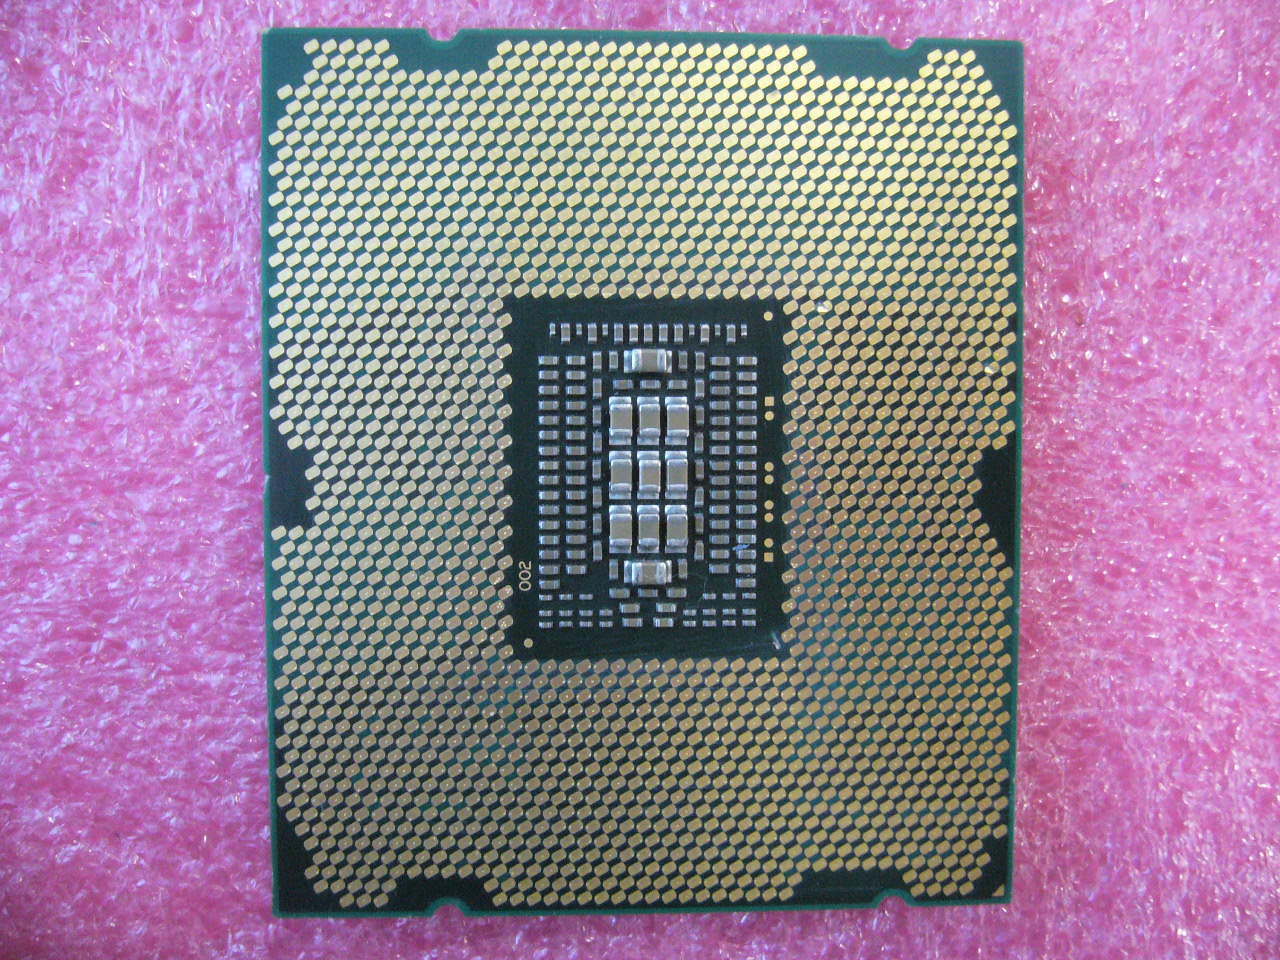 QTY 1x Intel CPU E5-2640 CPU 6-Cores 2.5Ghz LGA2011 SR0KR Mem Channel damaged - Click Image to Close